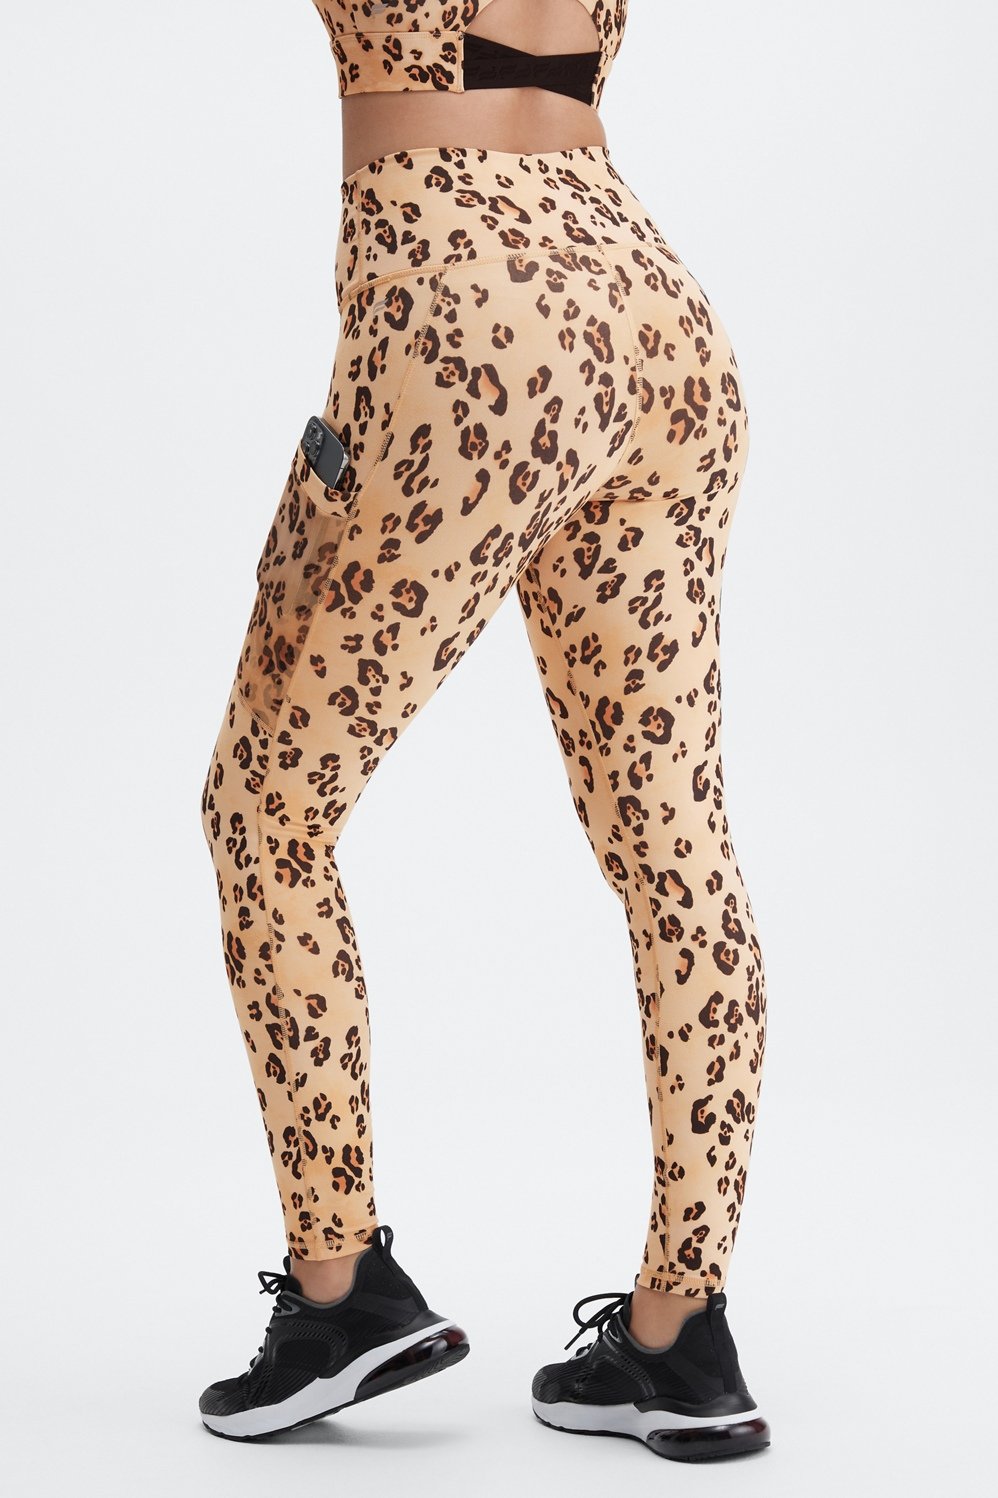 Pact Women's 7/8 Pocket Legging, Chocolate Leopard, Medium at